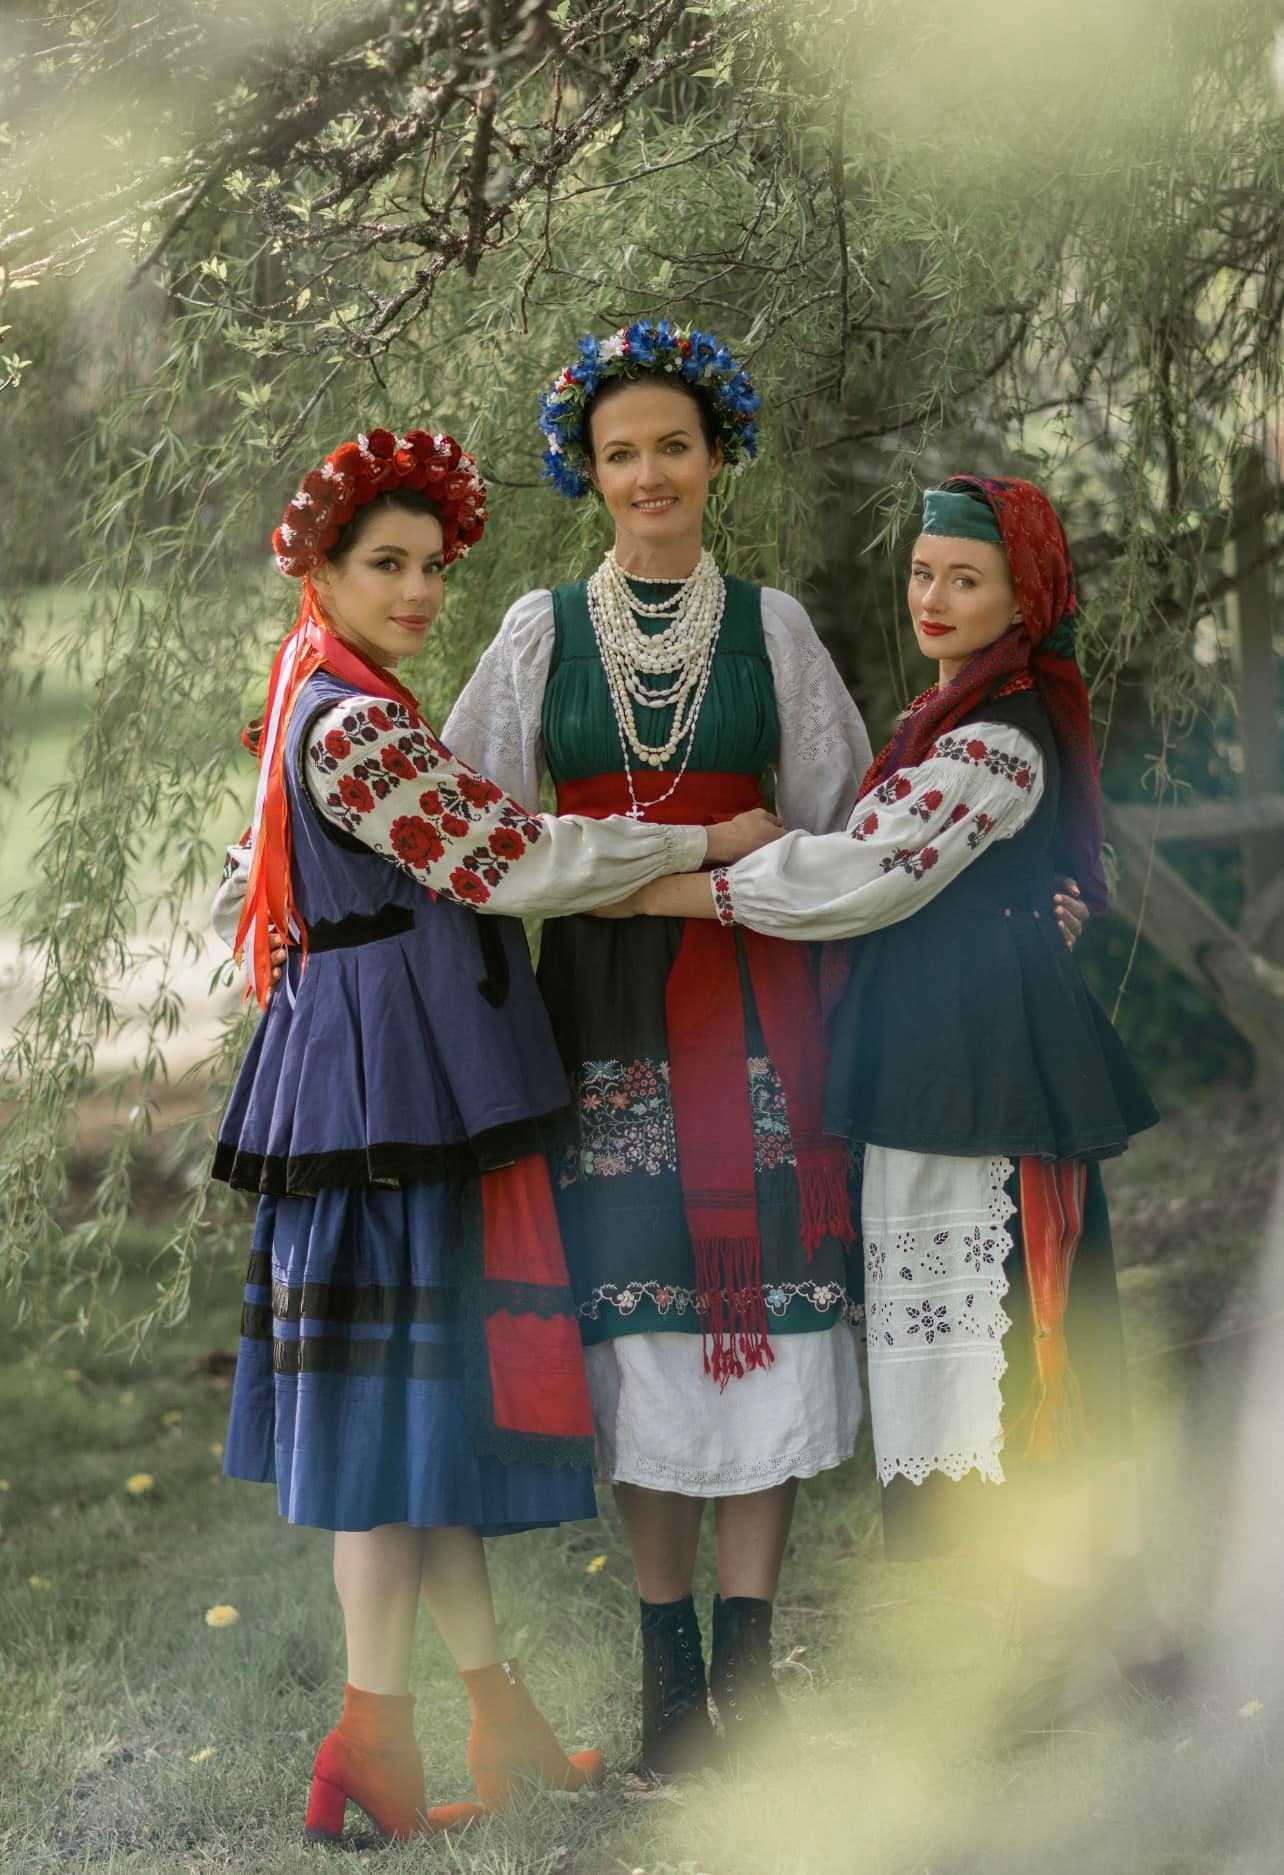 Click to enlarge image 01-ukr-tradition.jpg